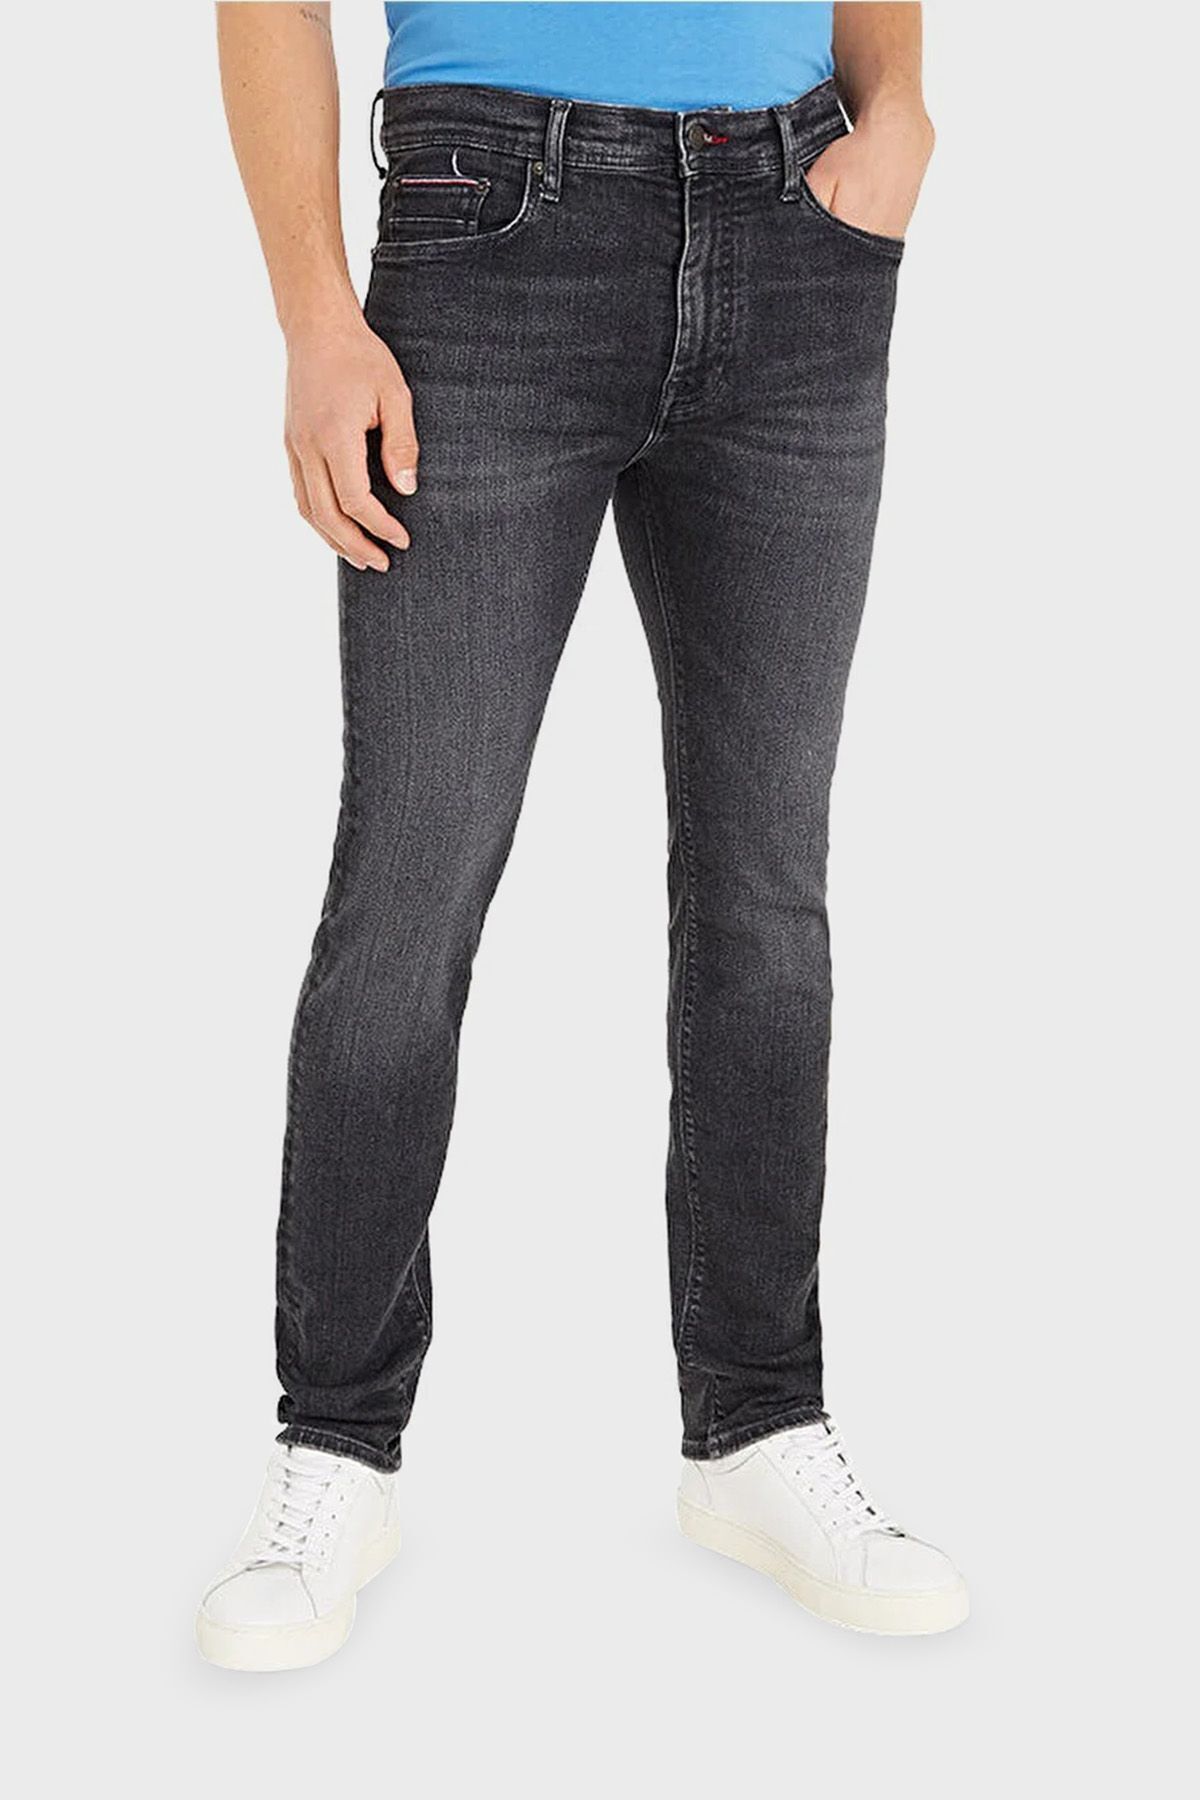 Tommy Hilfiger Erkek Denim Normal Belli Düz Model Günlük Kullanım Siyah Jeans MW0MW32086-1B3